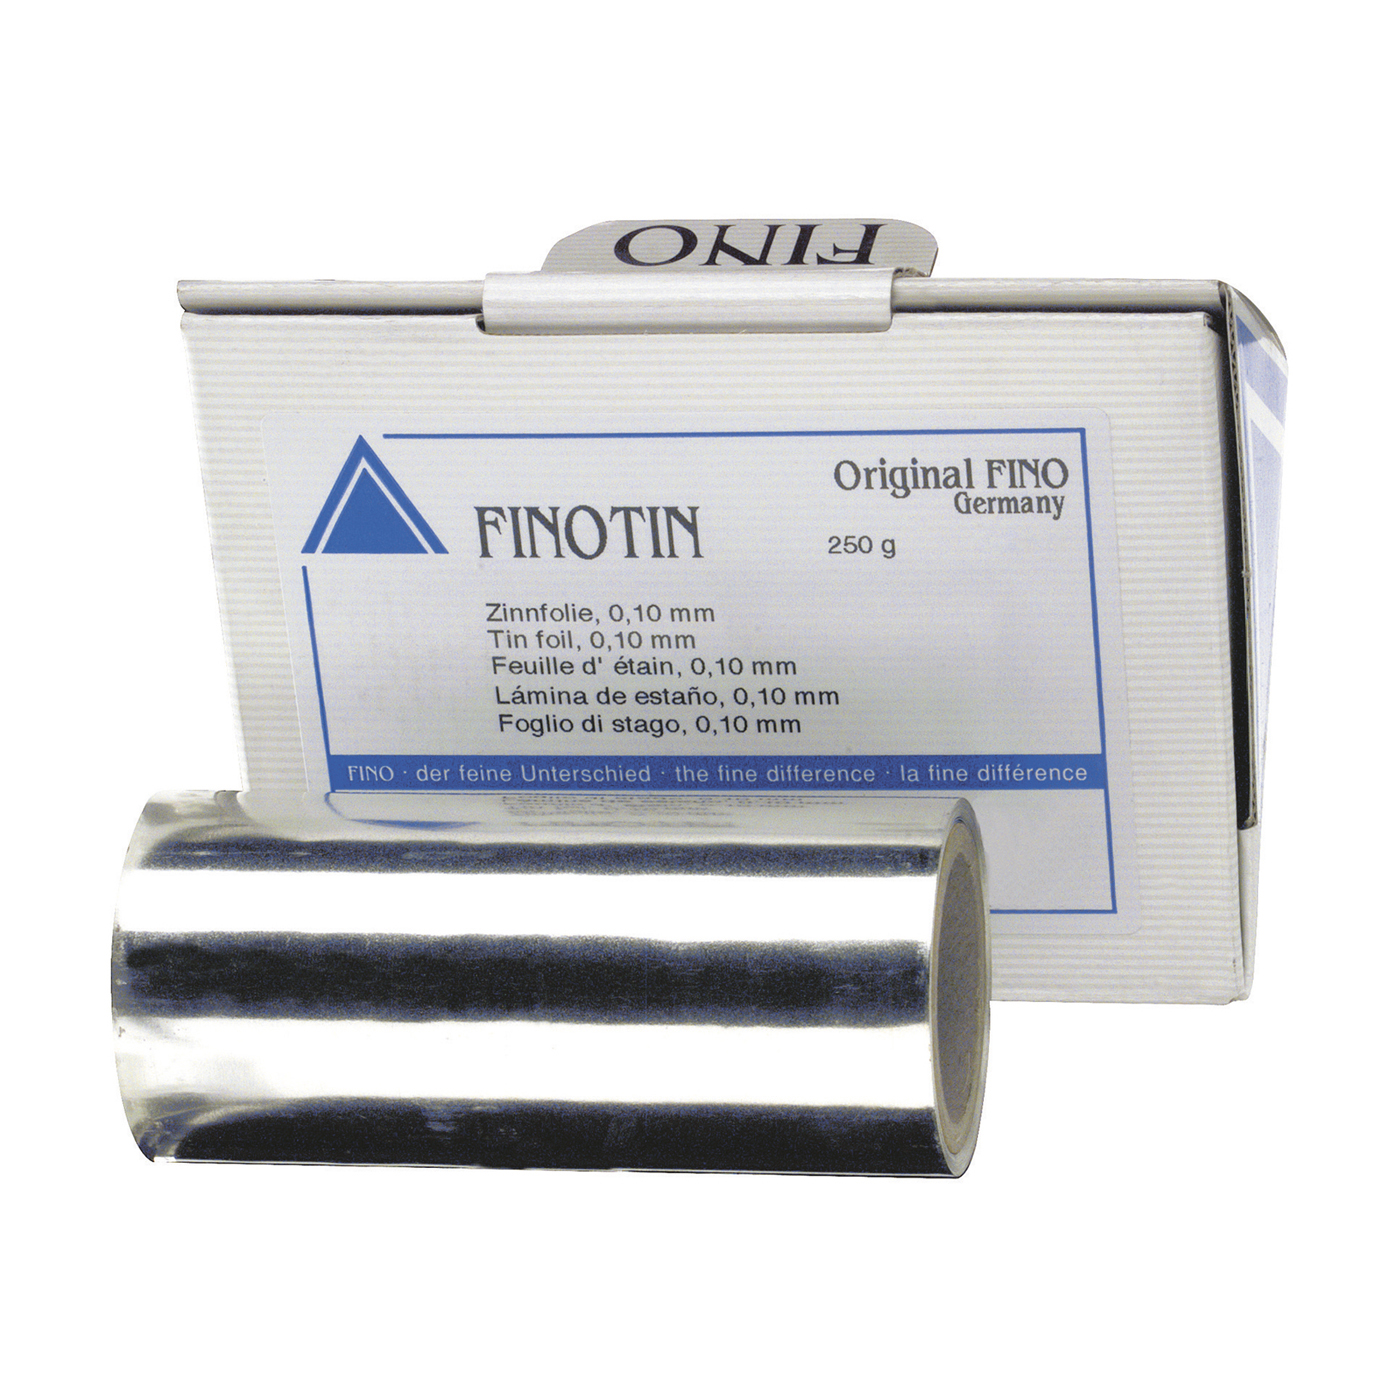 FINOTIN Tin Foil, 0.10 mm - 250 g